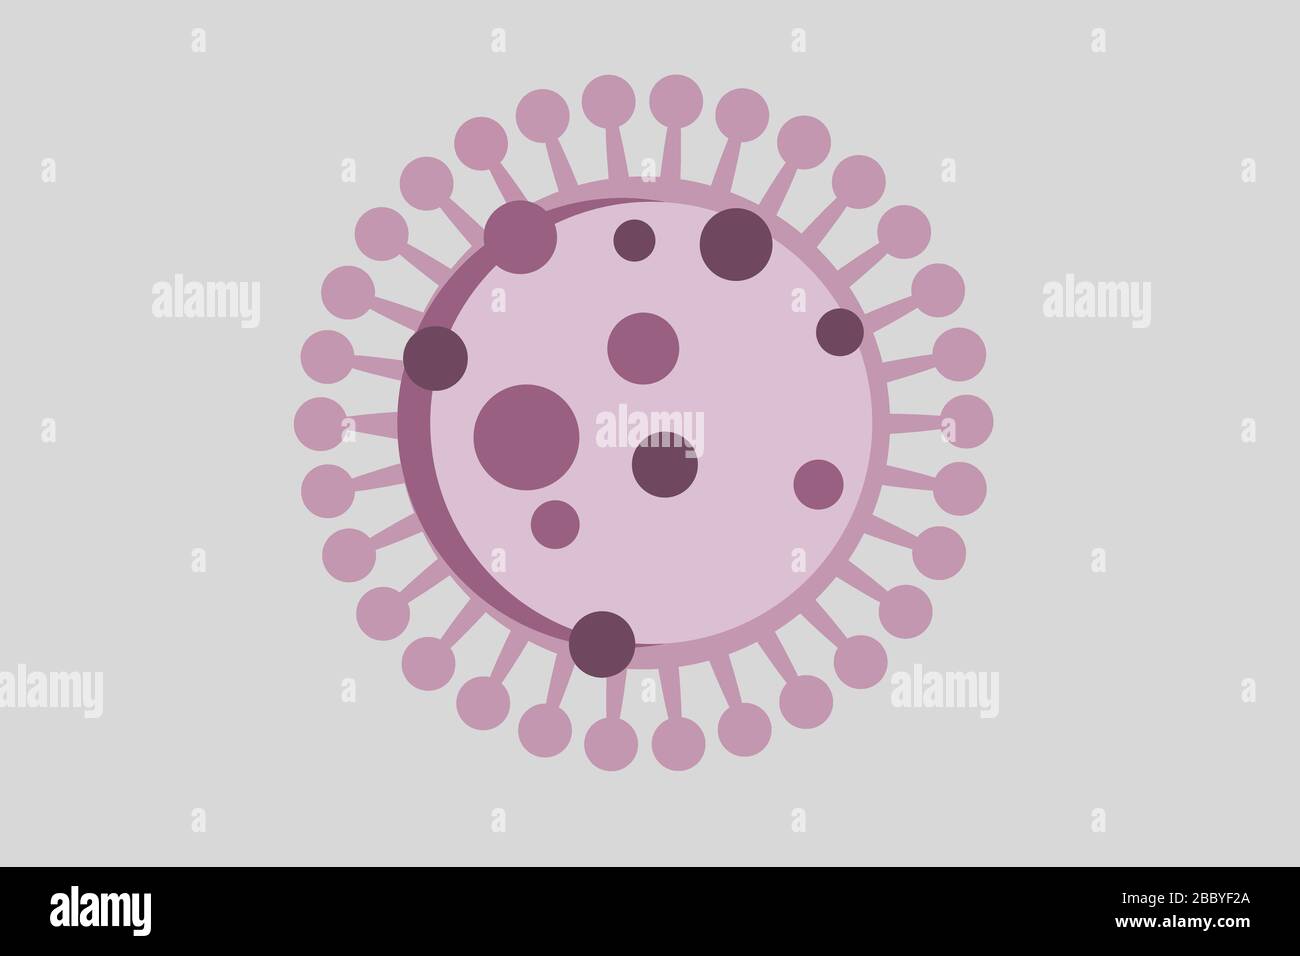 Virus o batteri isolati su sfondo bianco Foto Stock